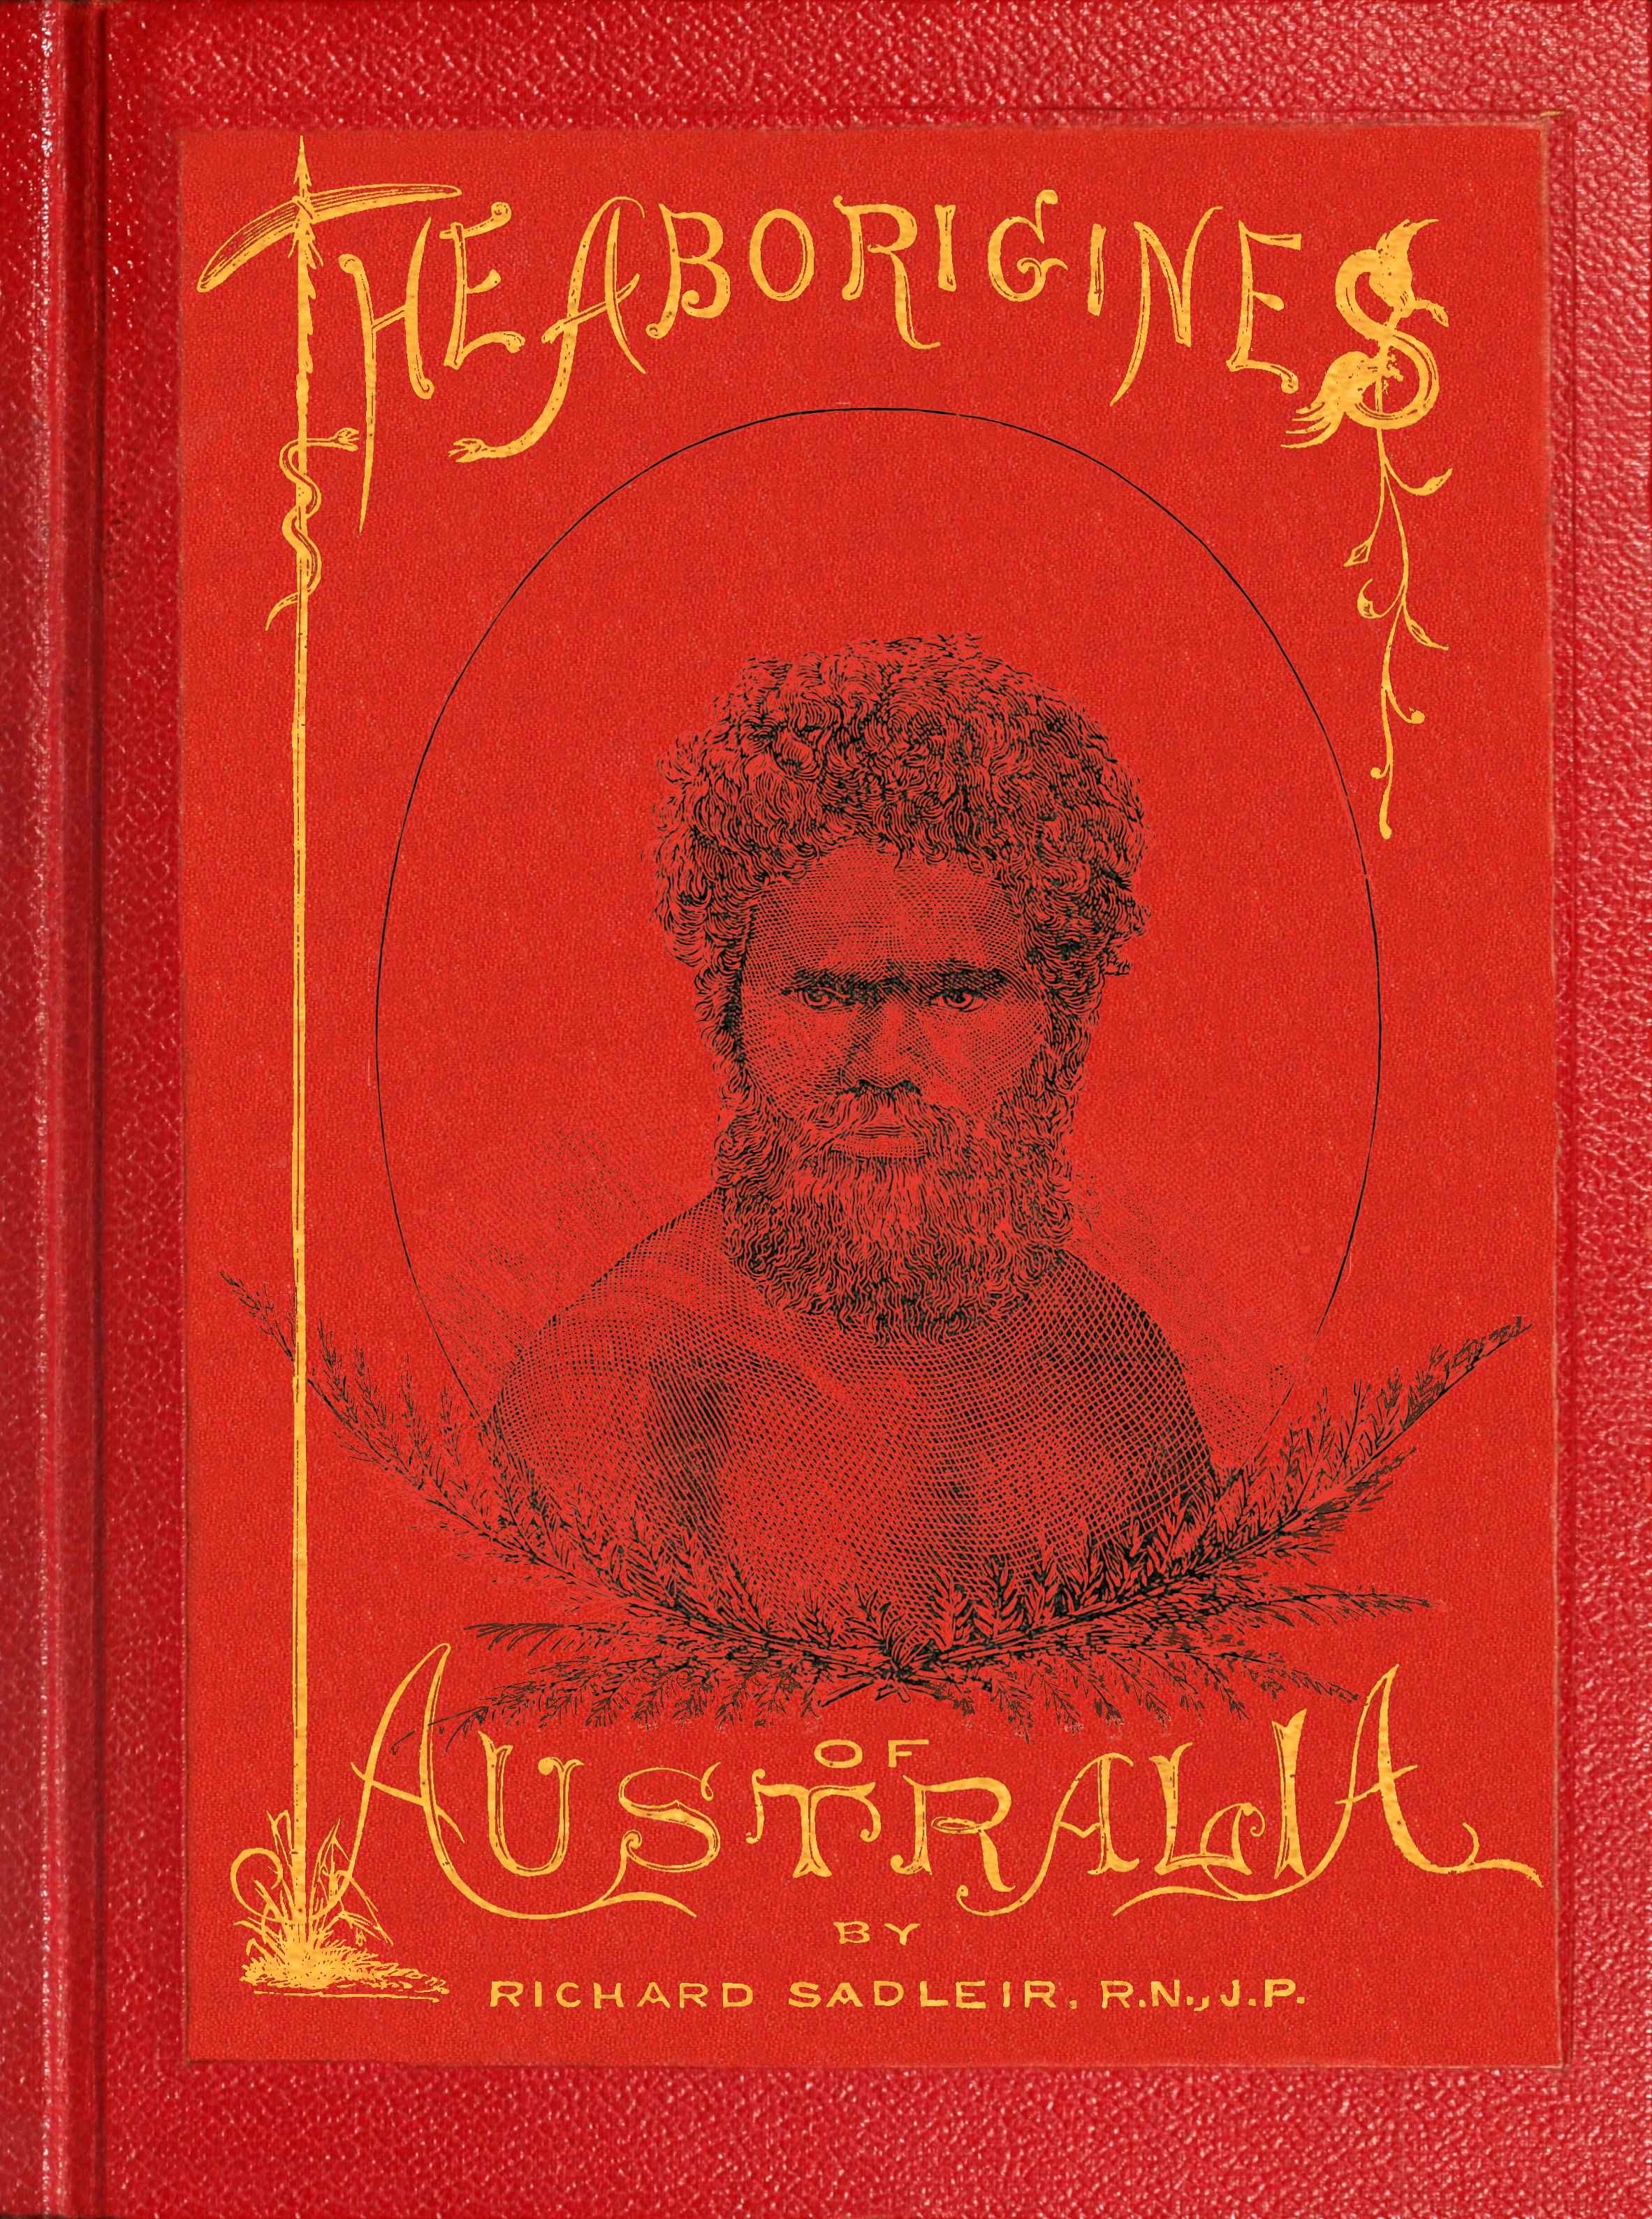 The Aborigines of Australia, by Richard Sadleir—A Project Gutenberg eBook